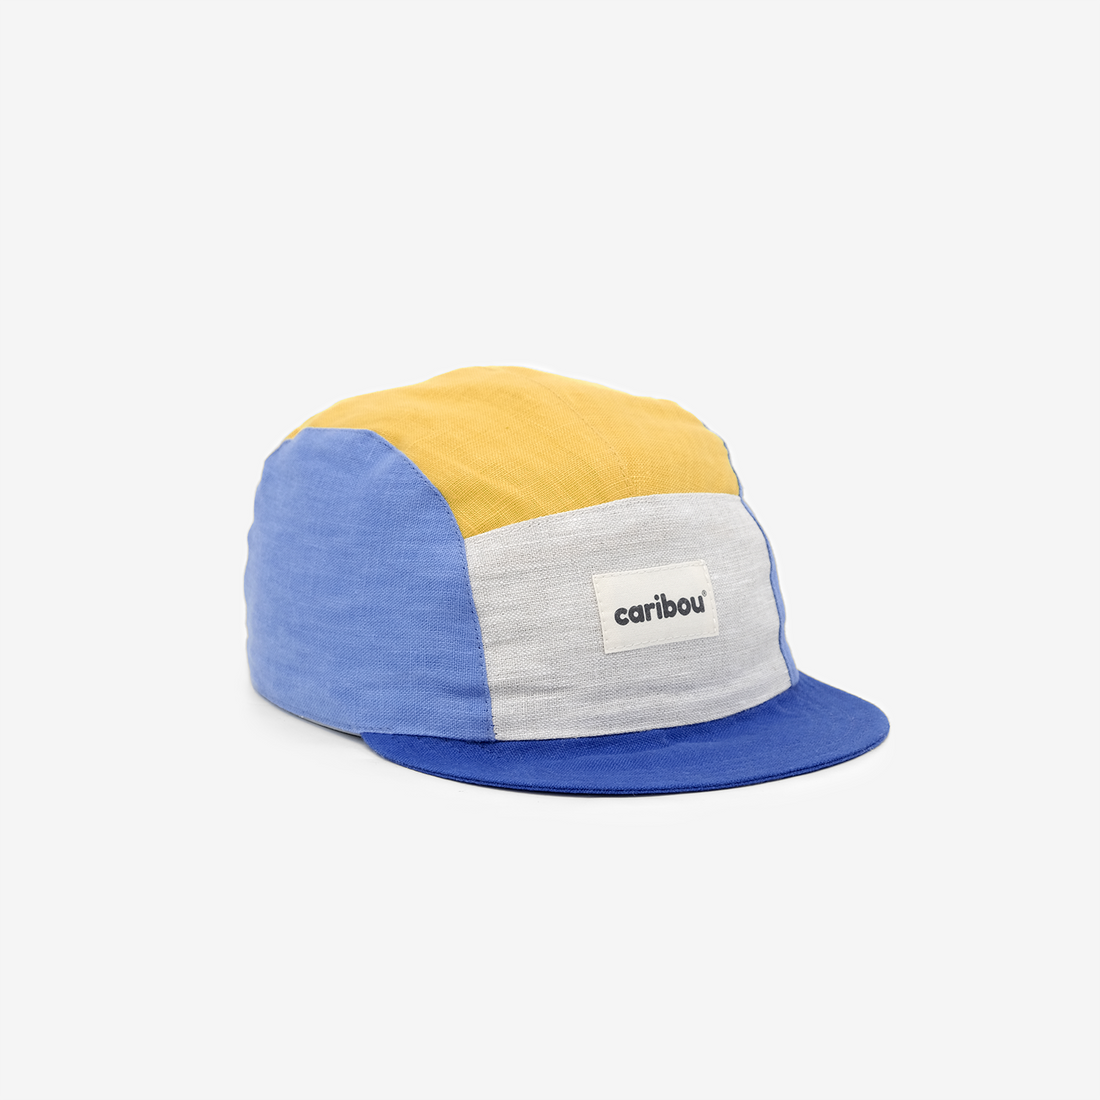 Linen cap by Caribou, multicoloured